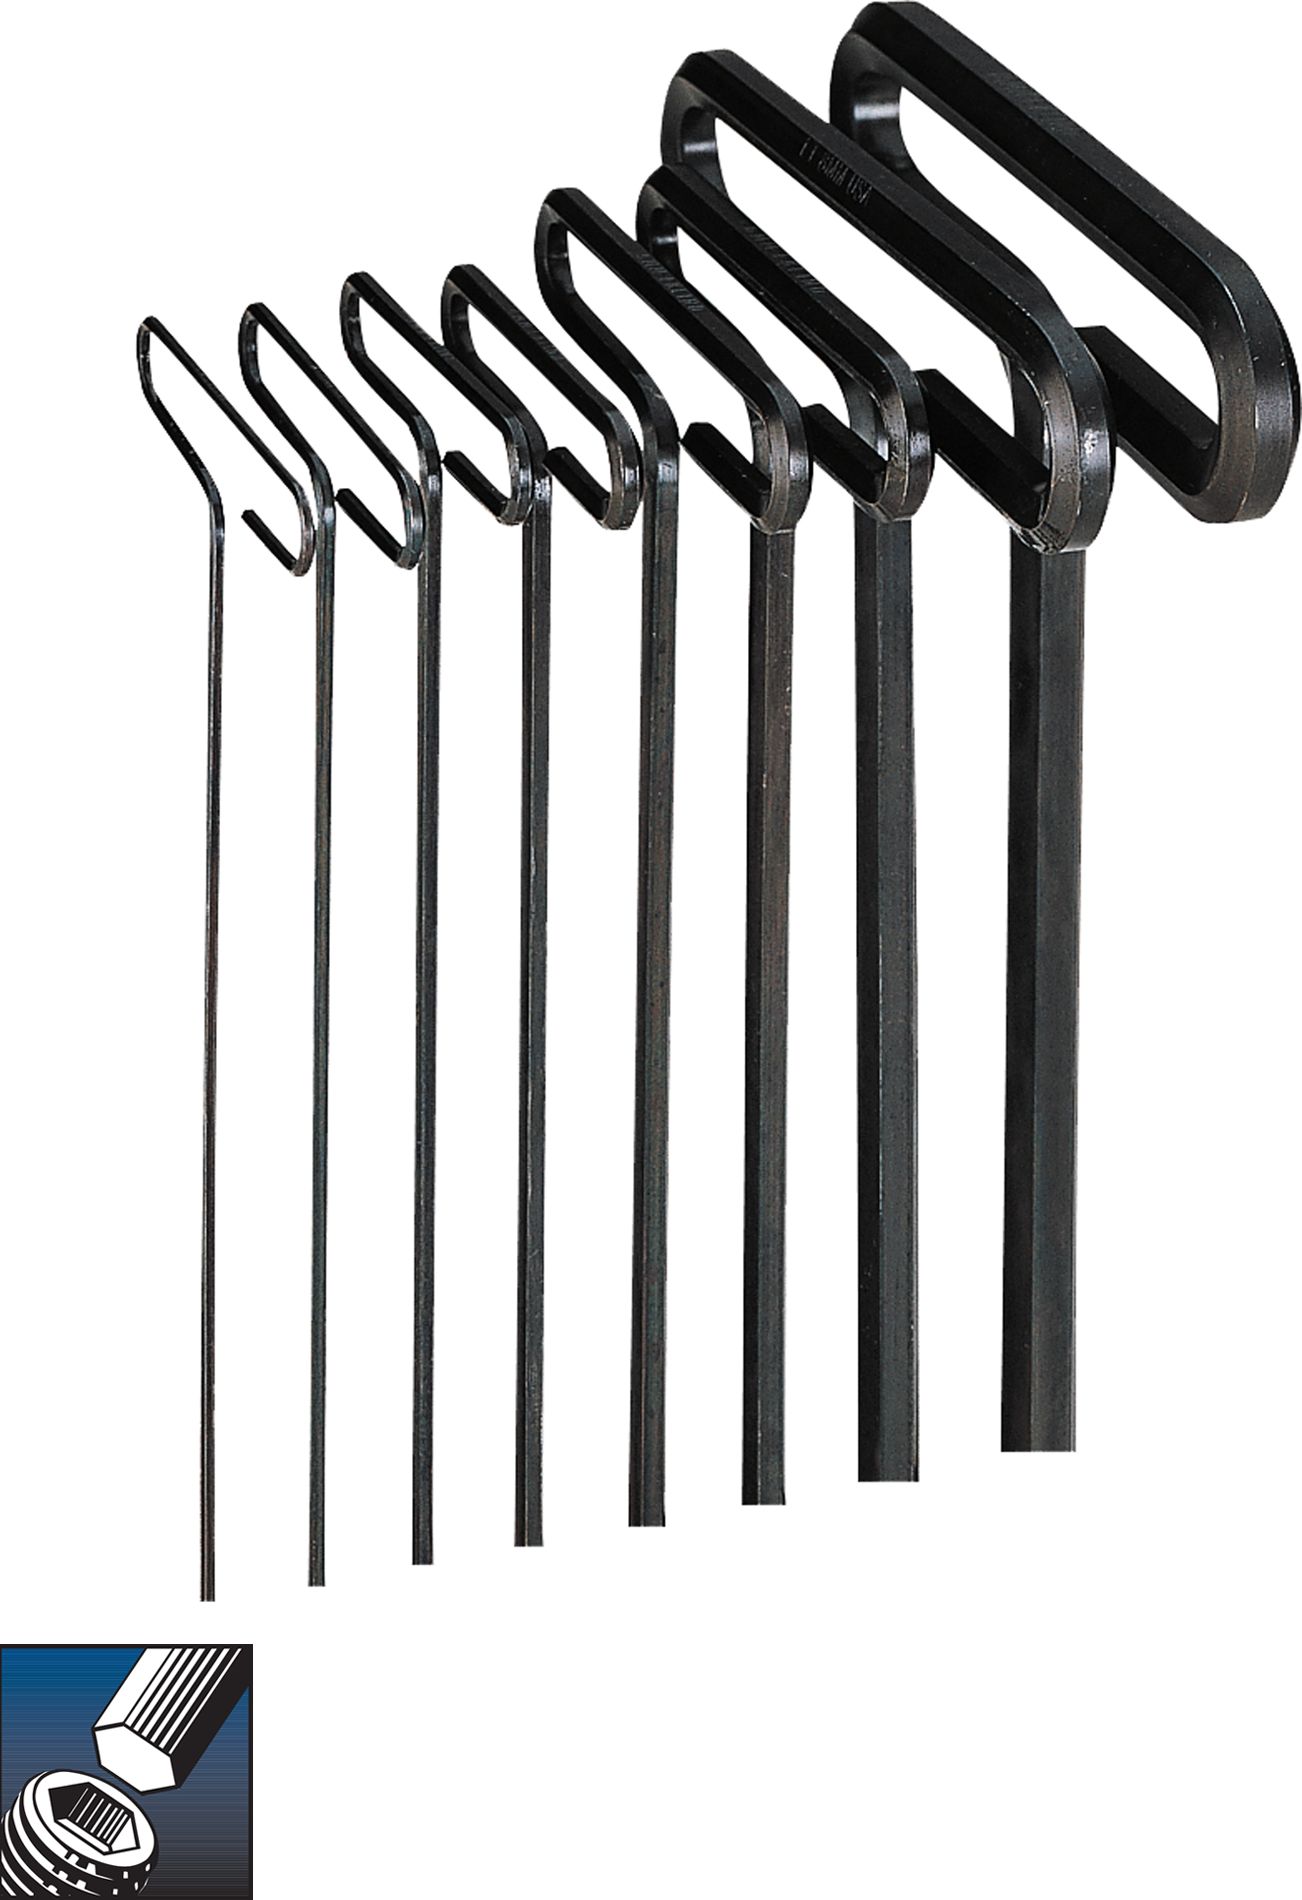 Eklind&#174 Standard Grip Hex T-Key Set, 6 inch Series, 8 keys: 2 to 10 MM & Pouch